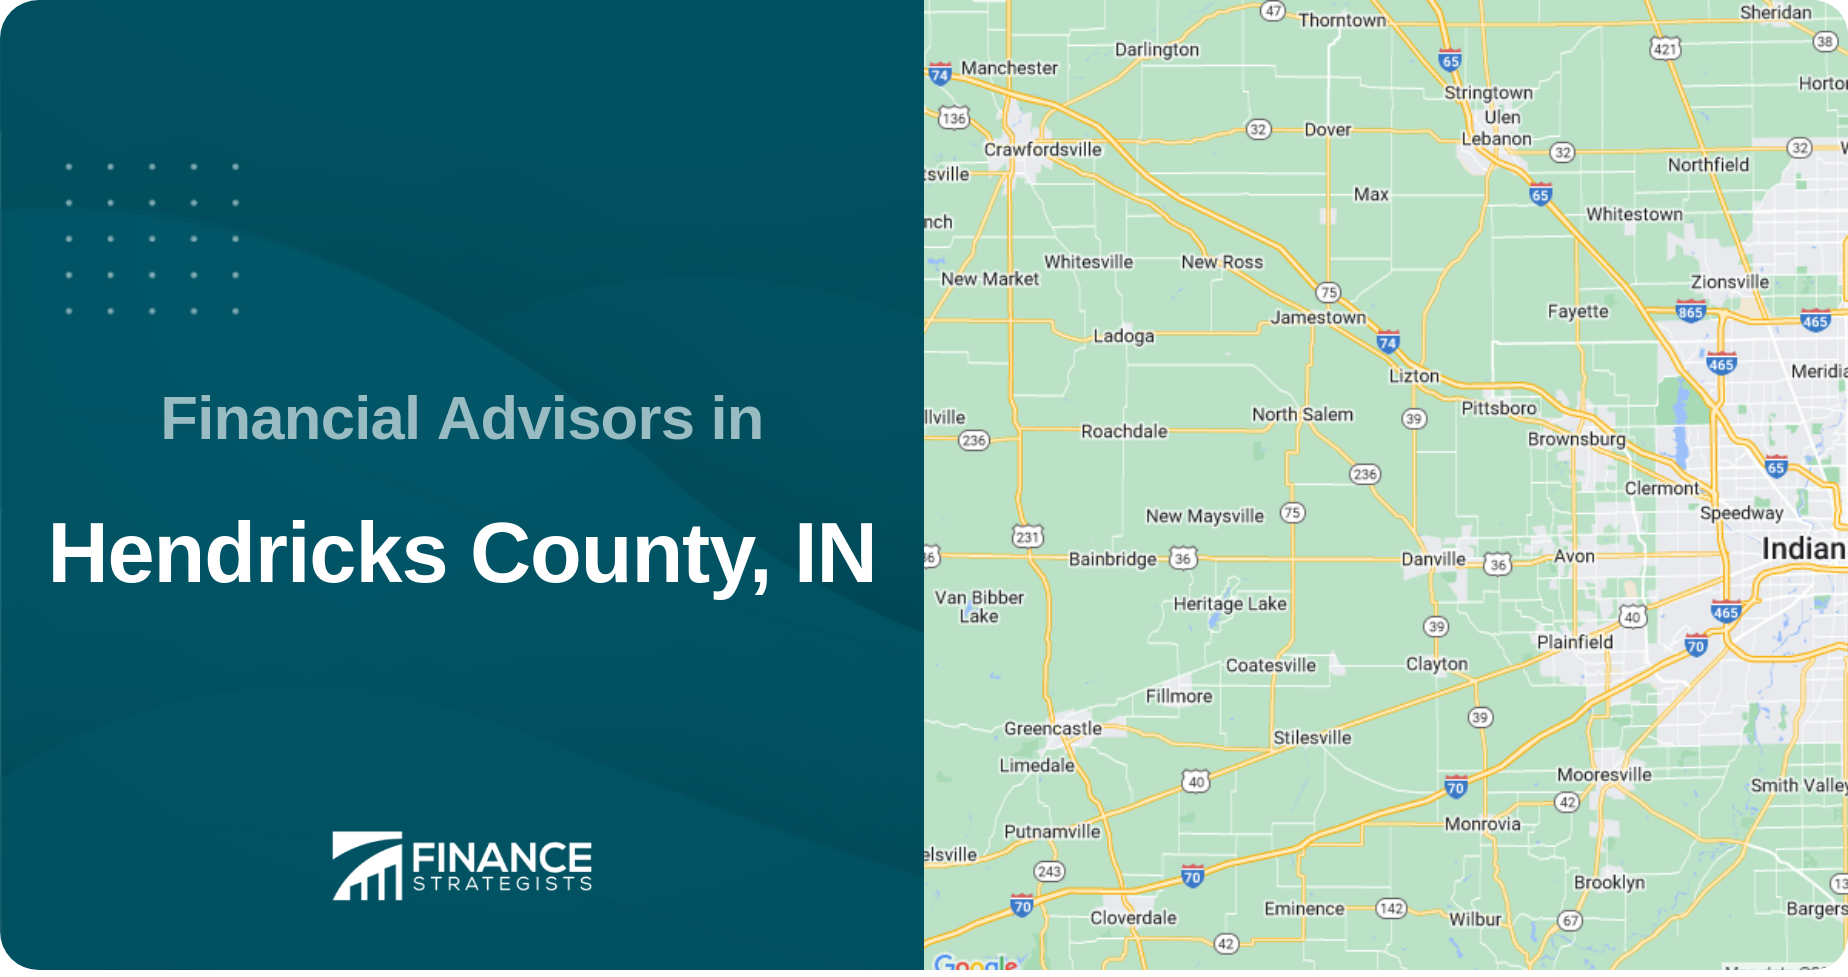 Financial Advisors in Hendricks County, IN